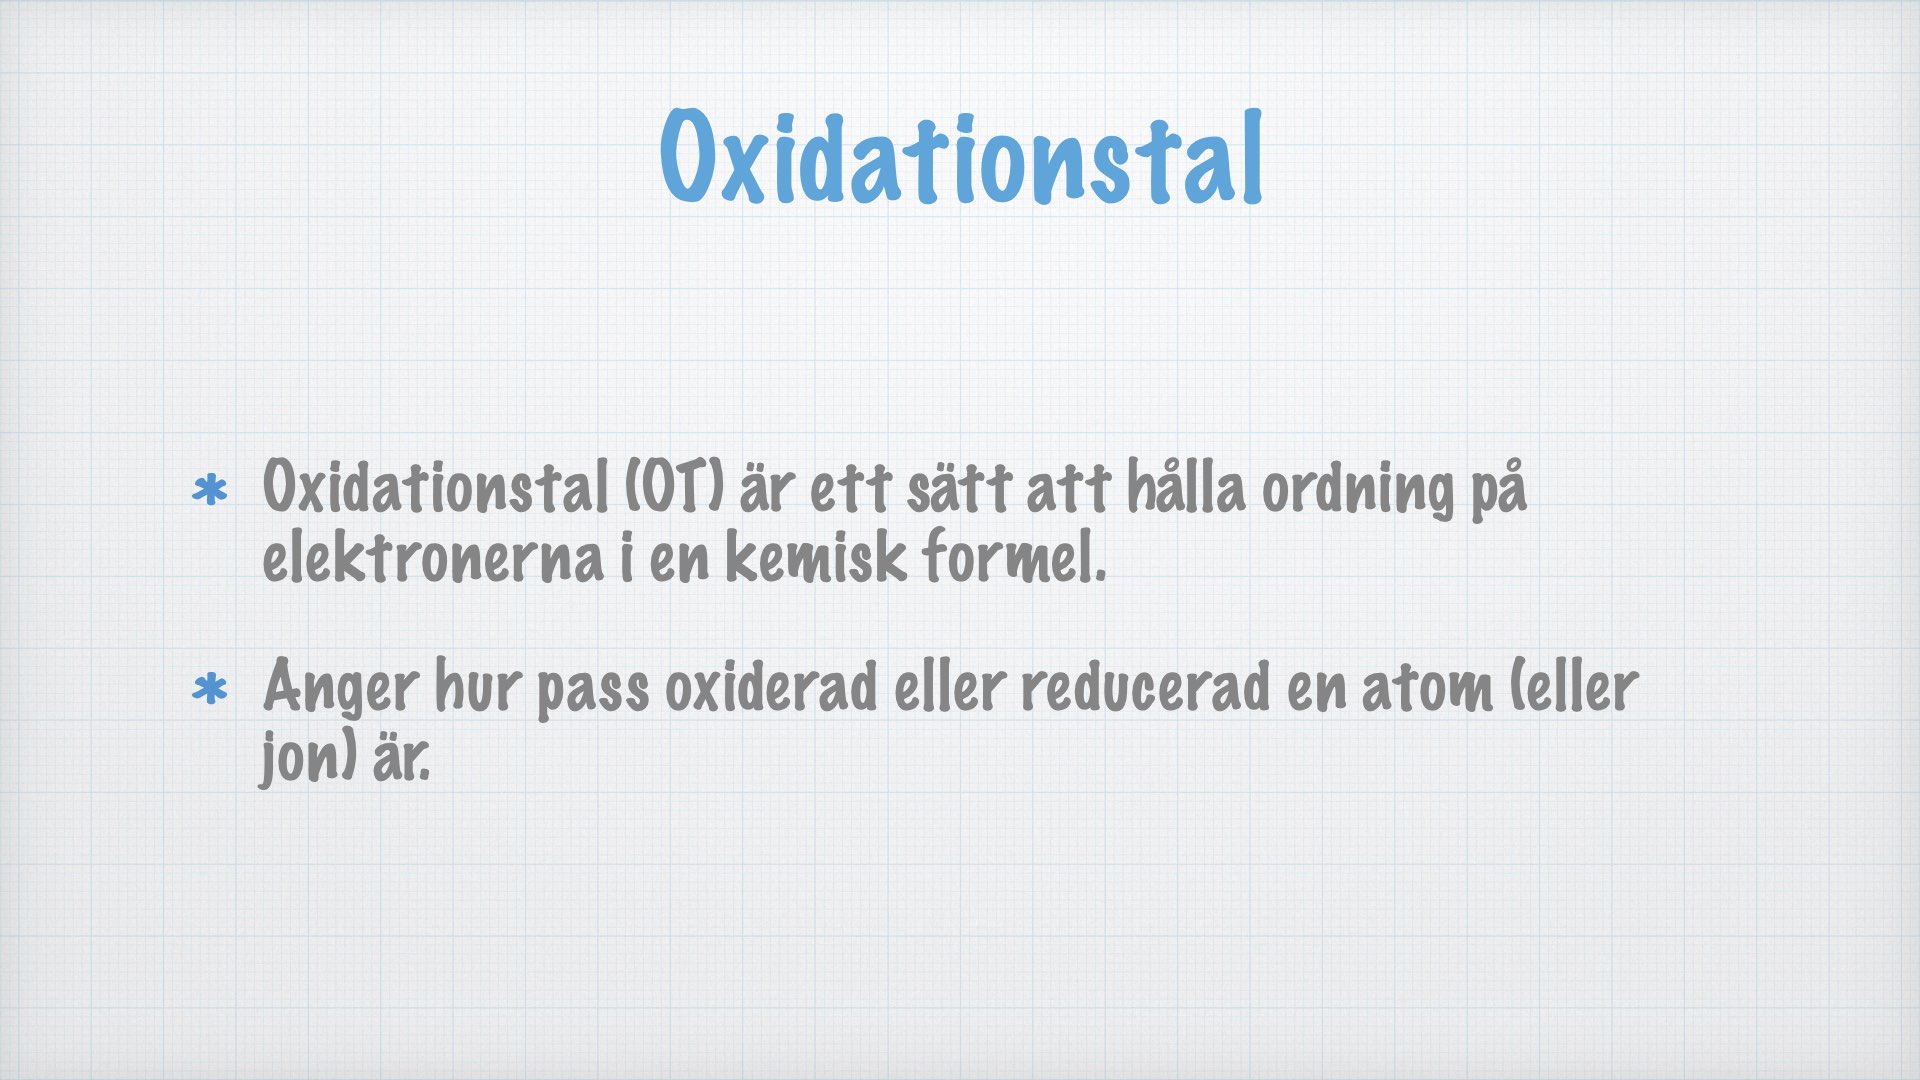 Oxidationstal